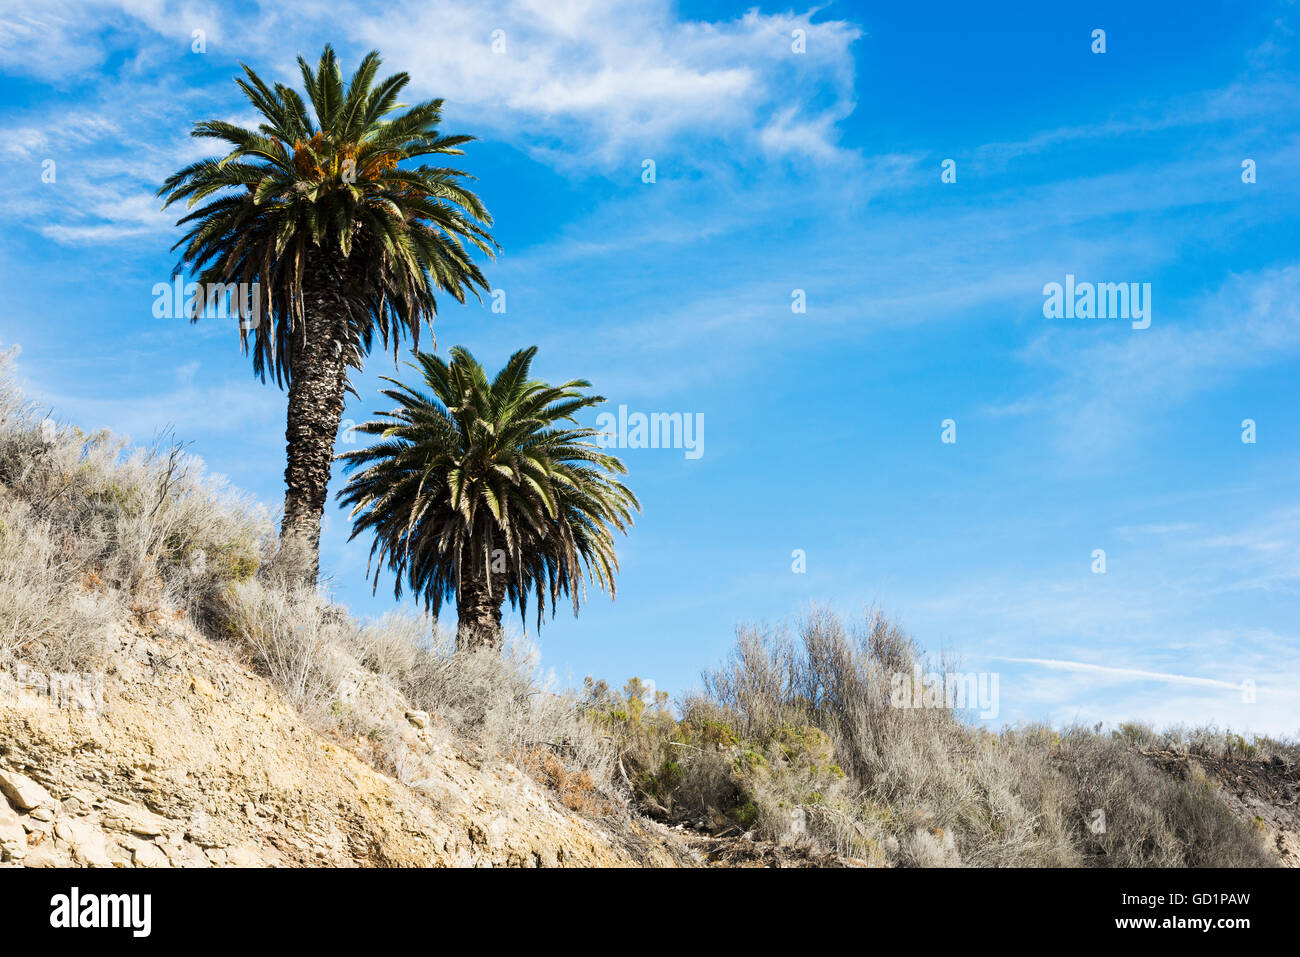 Beach cliffs with palm trees, near Santa Barbara; California, United States of America Stock Photo